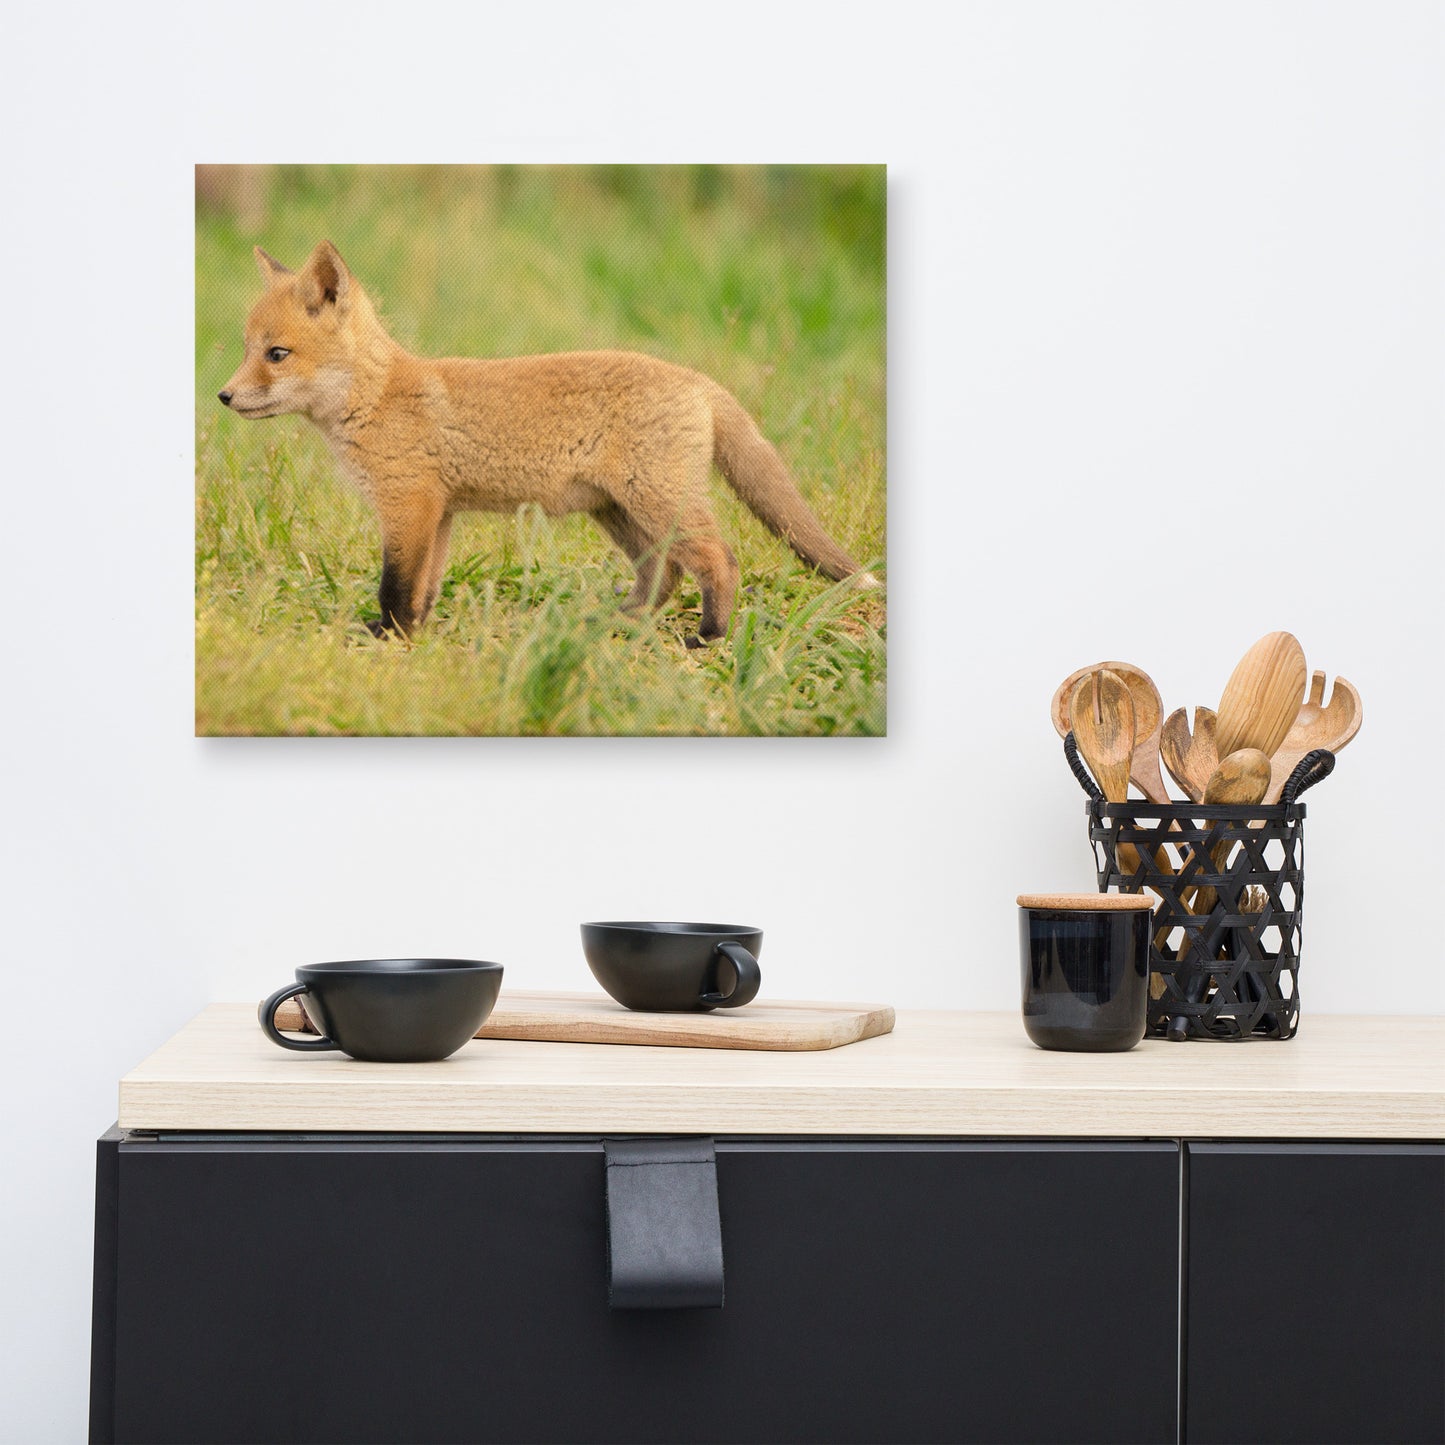 Simple Nursery Wall Decor: Fox Pup In Meadow - Wildlife / Animal / Nature Photograph Canvas Wall Art Print - Artwork - Wall Decor